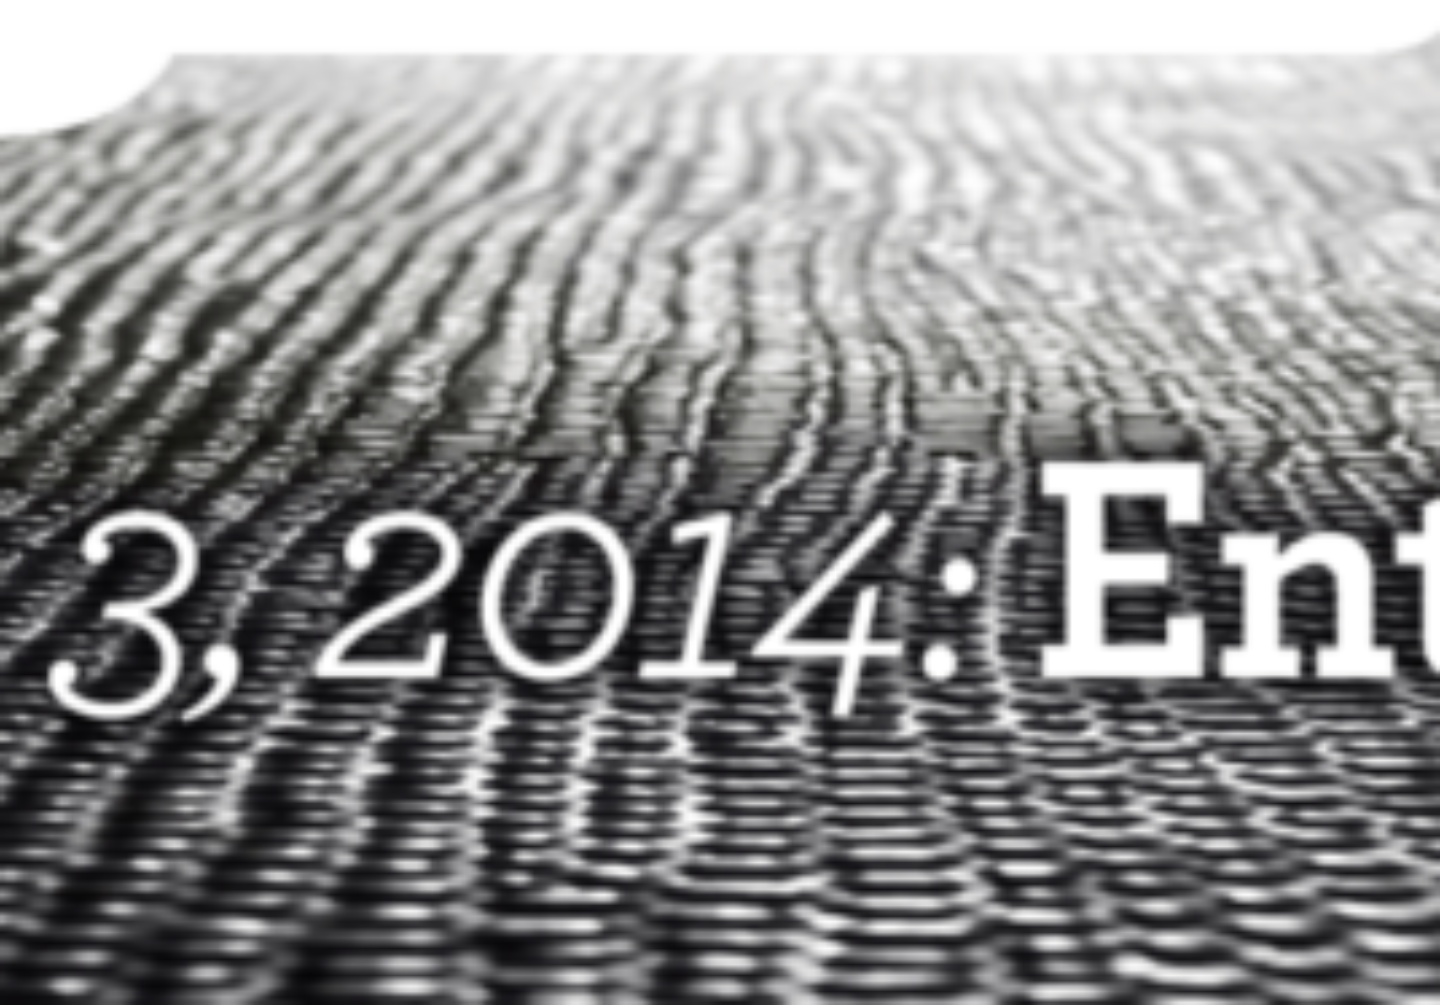 Inner Radio – First Entry January 3, 2014 – Eric Scott (Day For Night)